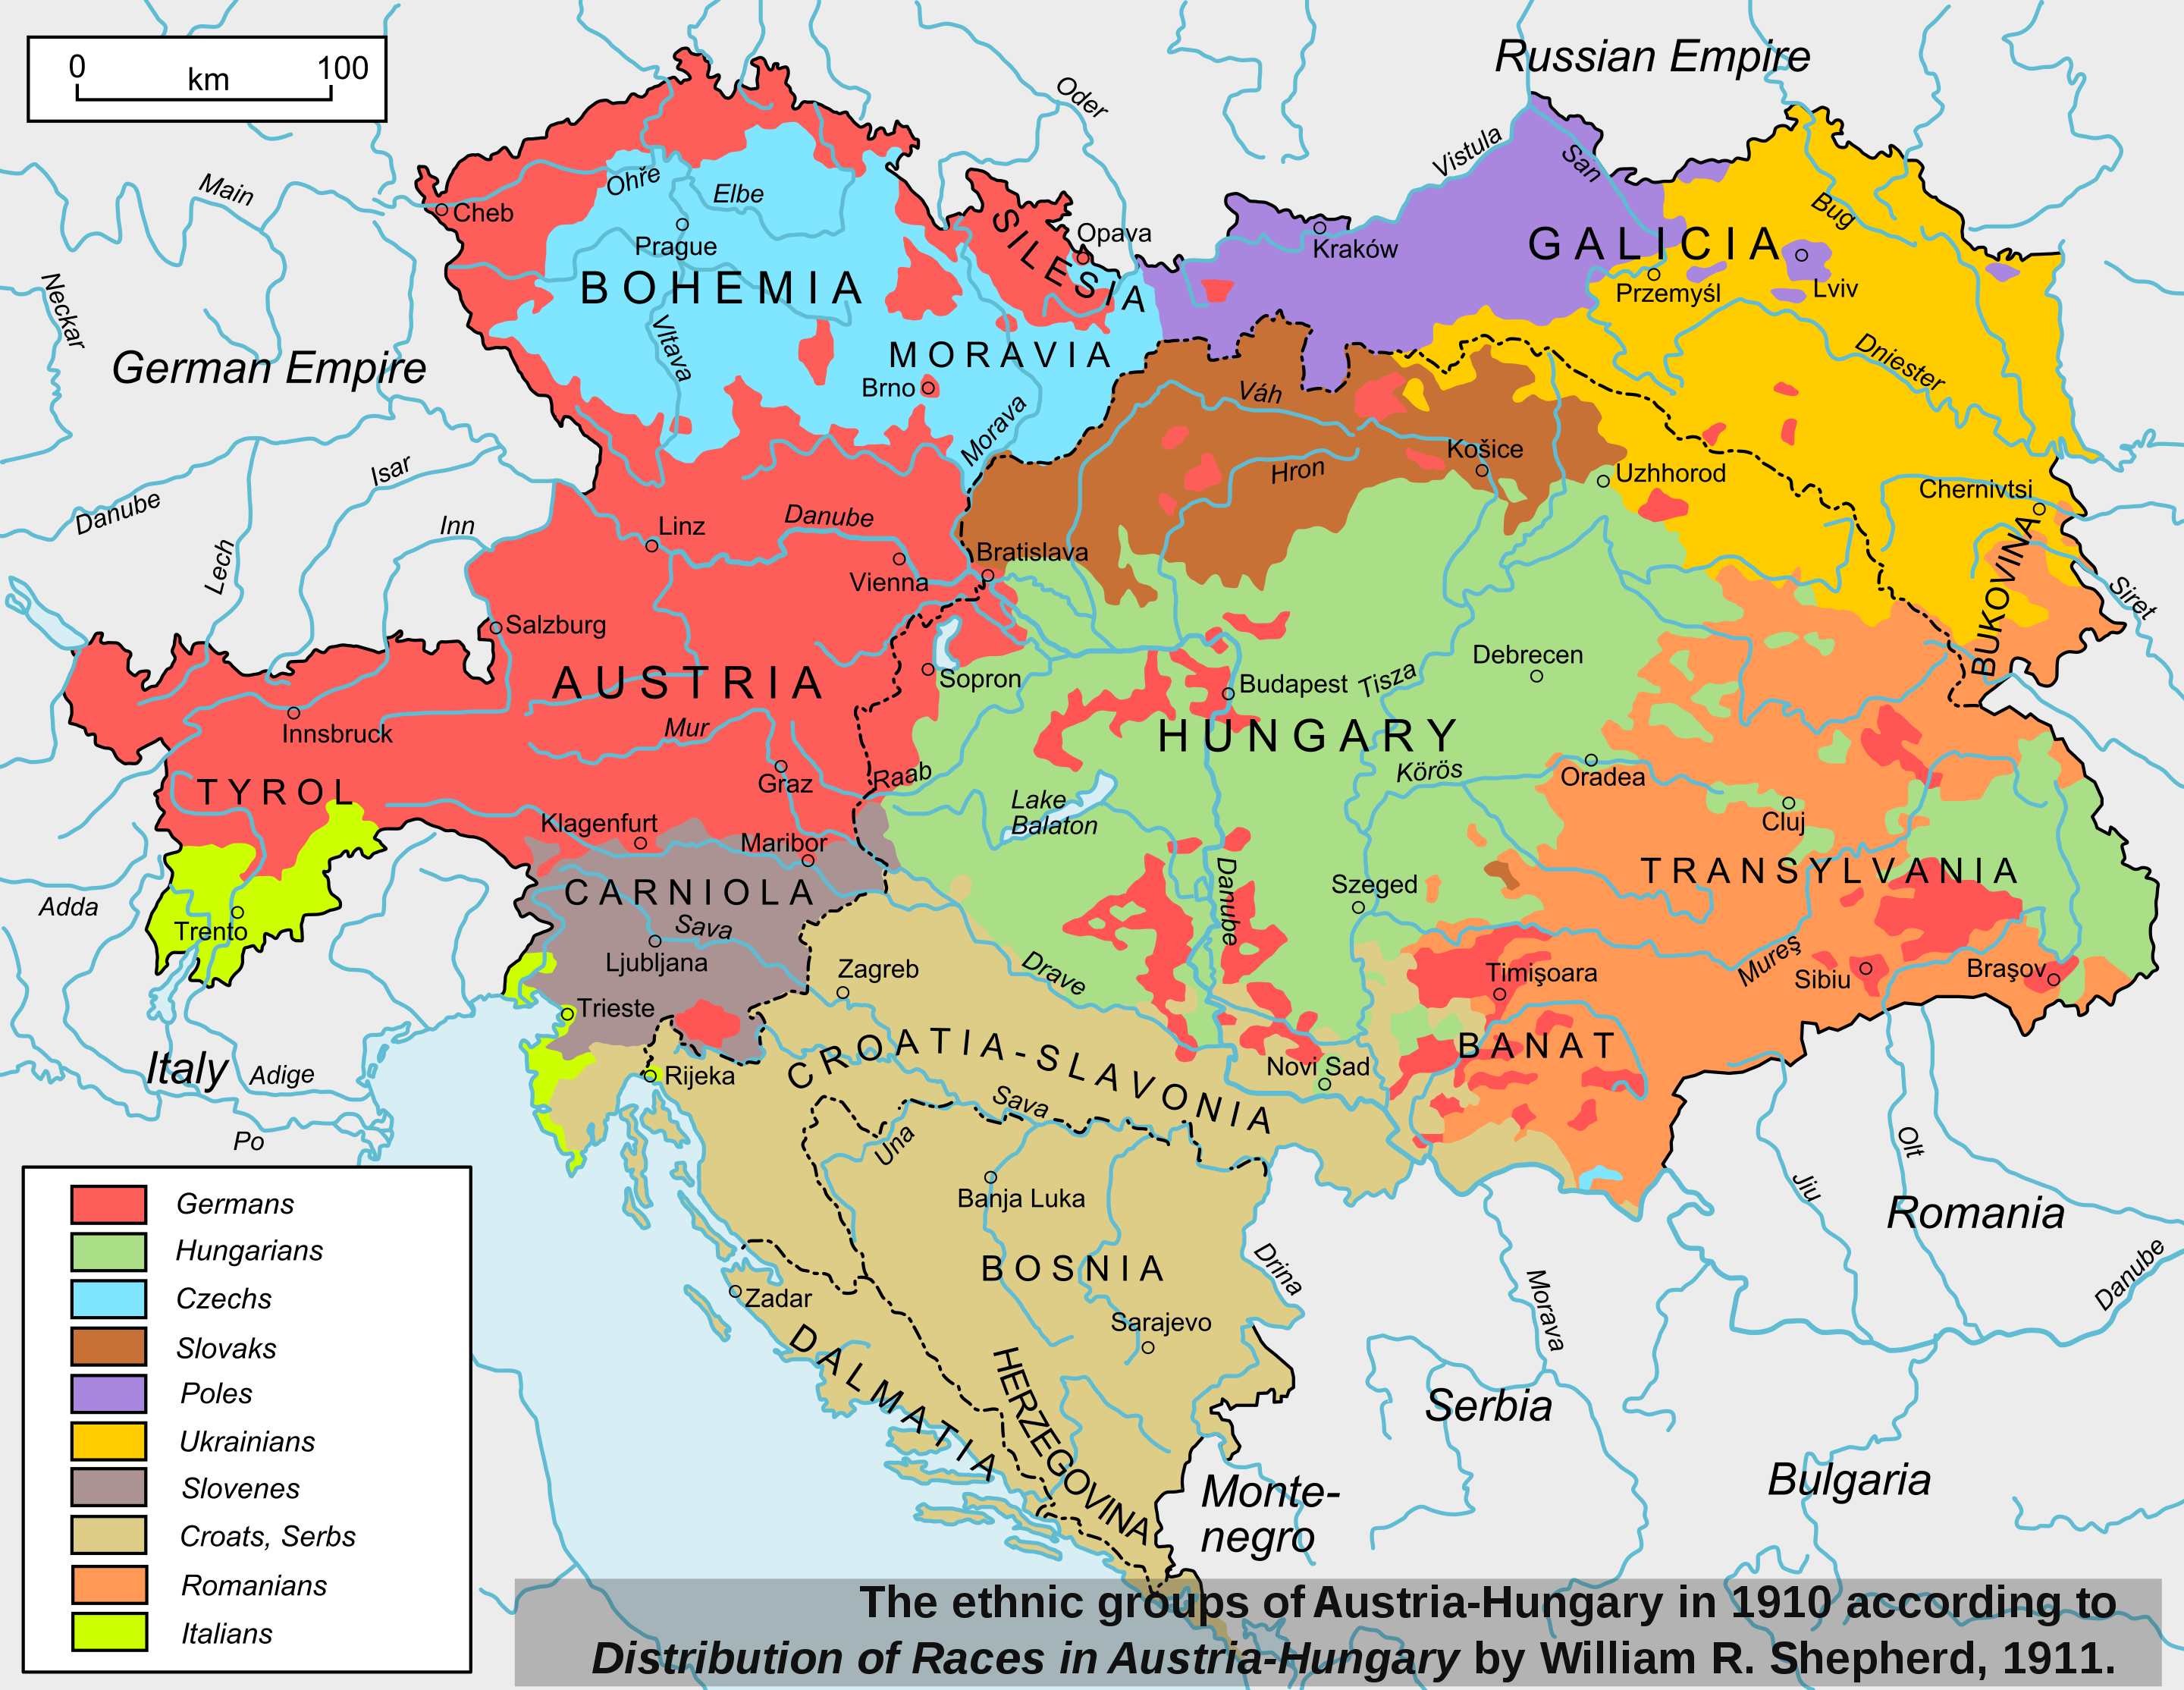 Ethnicities in the Austro-Hungarian Empire